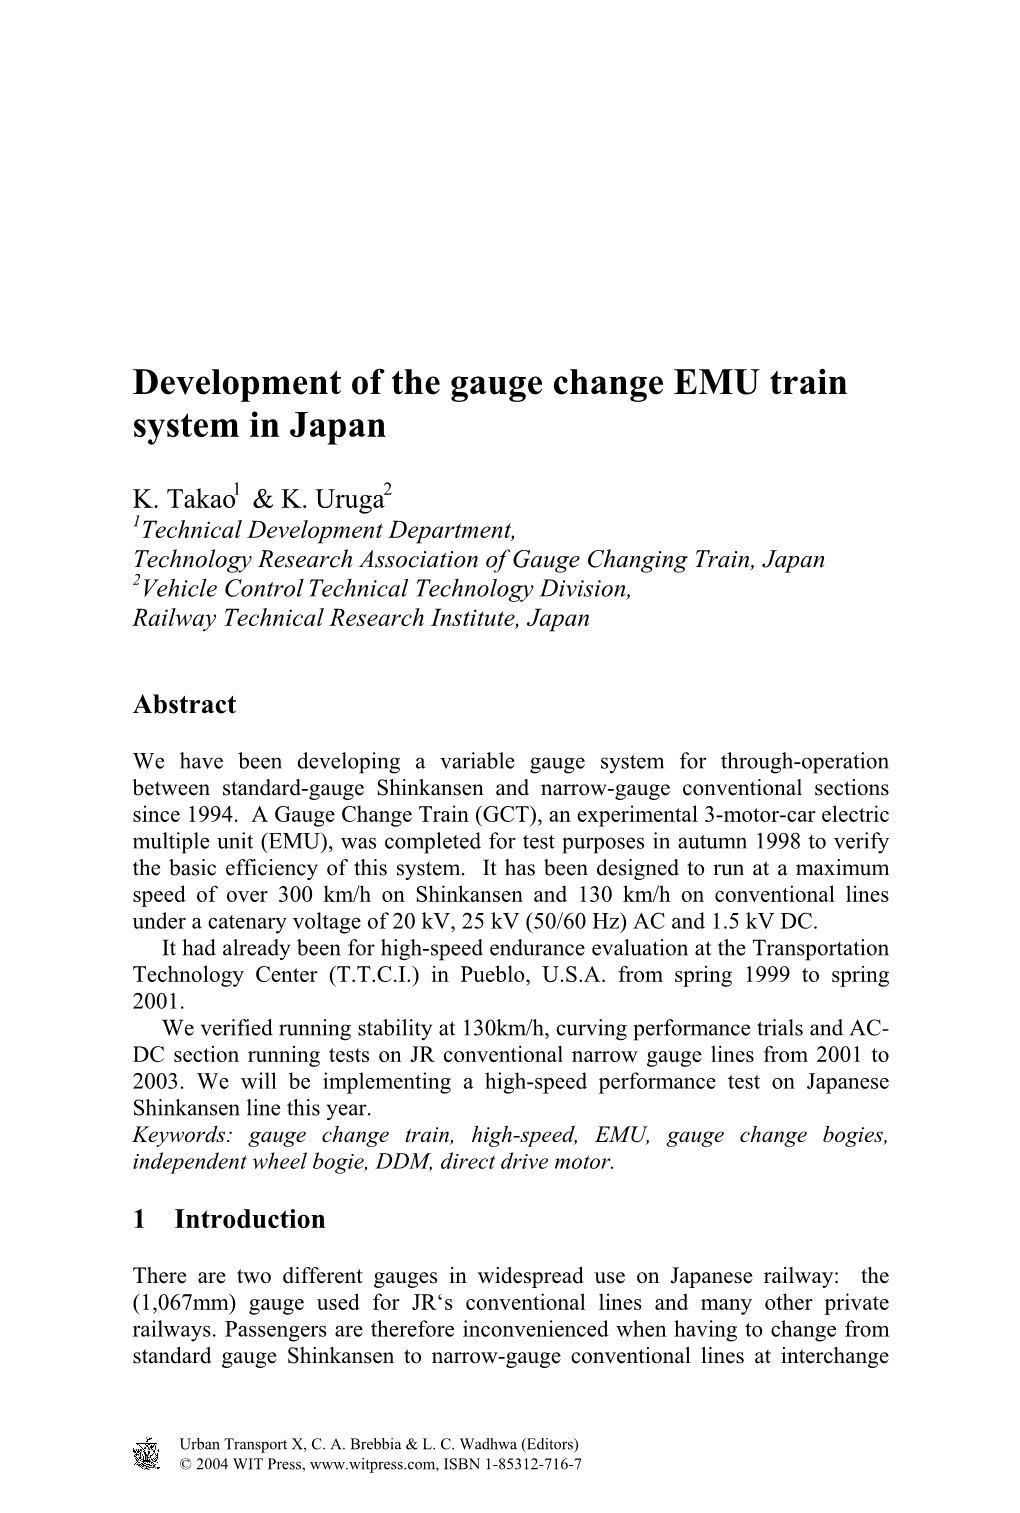 Development of the Gauge Change EMU Train System in Japan